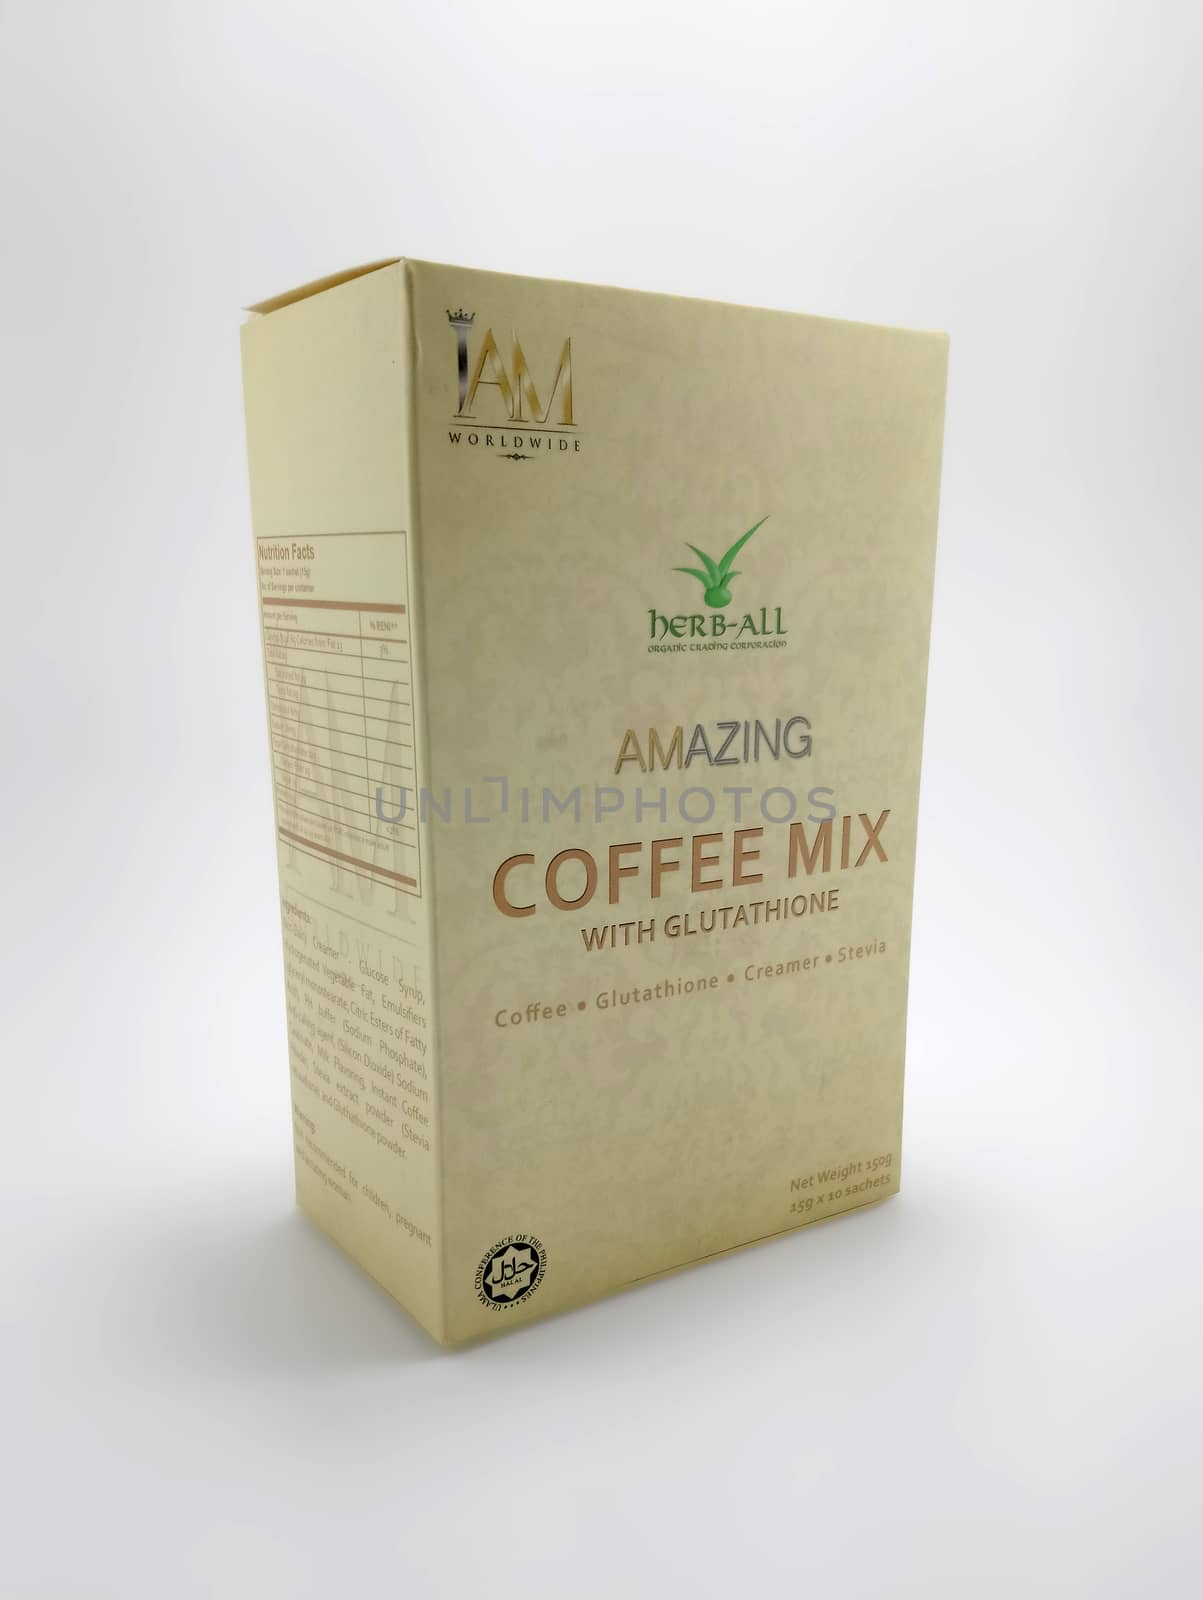 Iam amazing coffee mix with glutathione in Manila, Philippines by imwaltersy